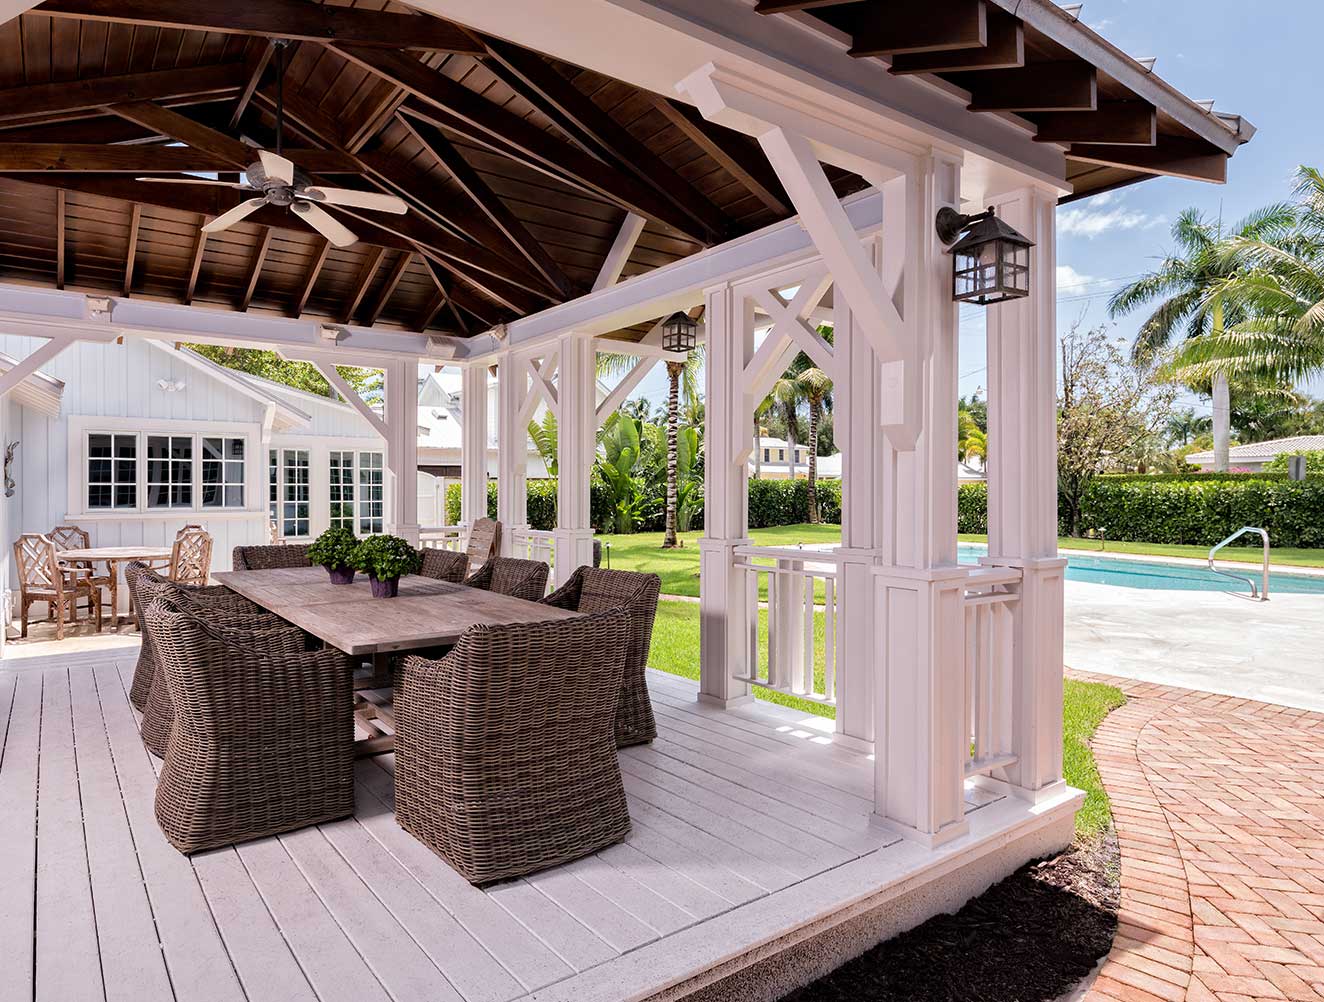 Key West style home with custom gazebo and pool